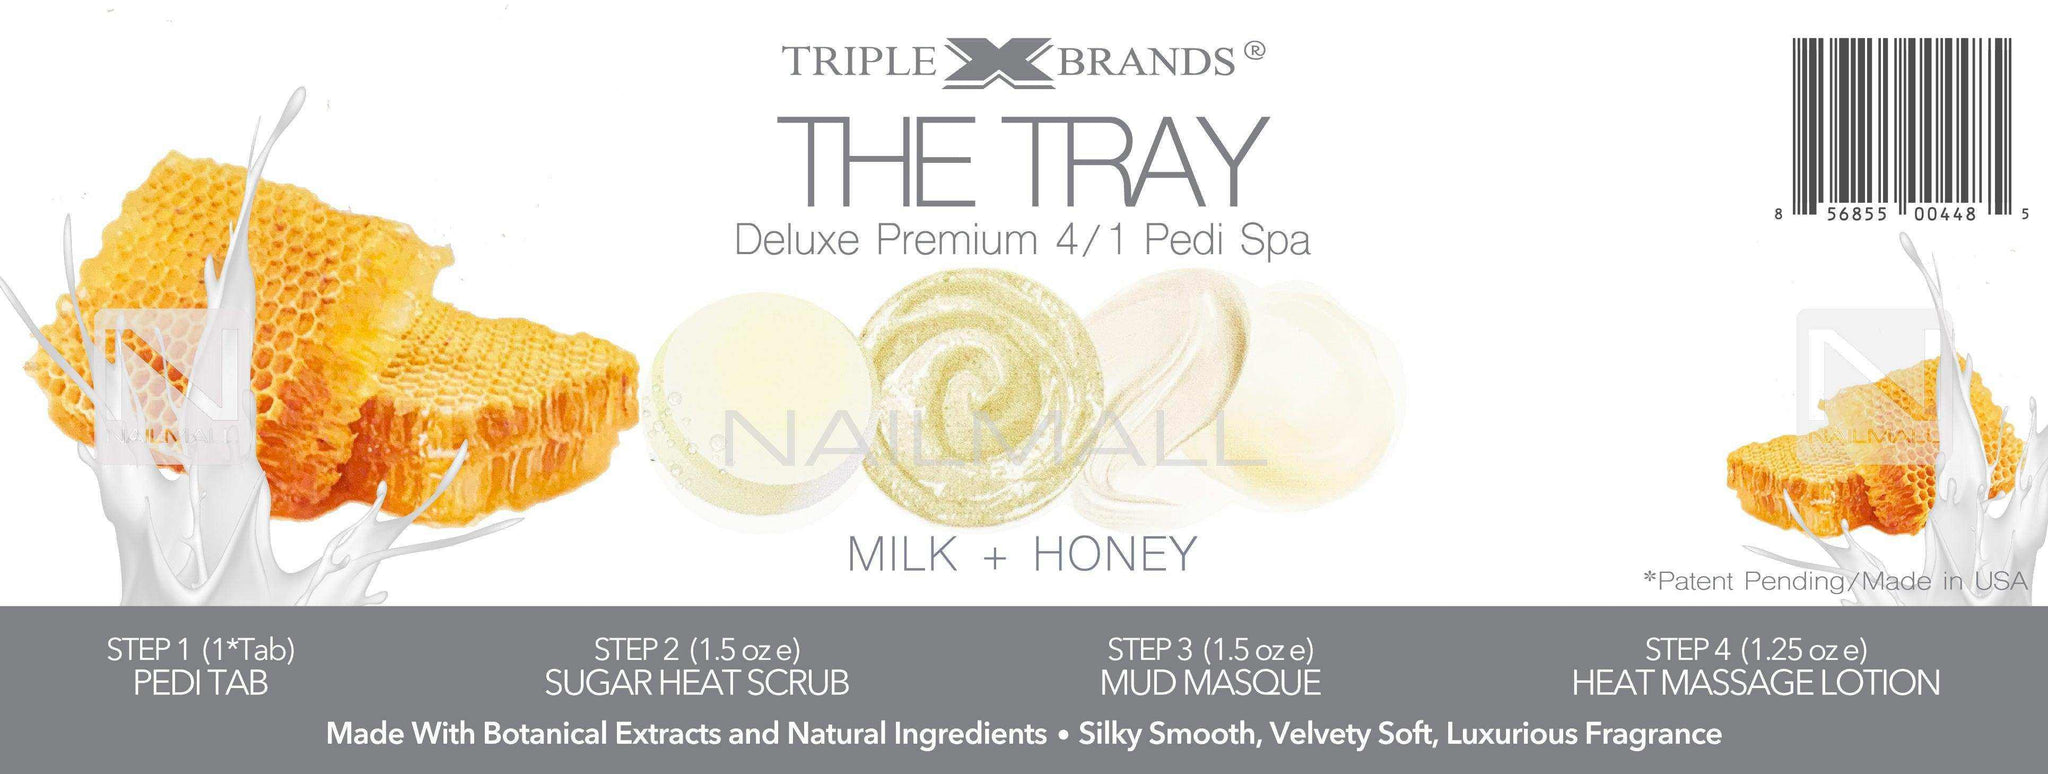 Triple X Brands 4/1 Pedi Spa Tray - Milk & Honey 1pc